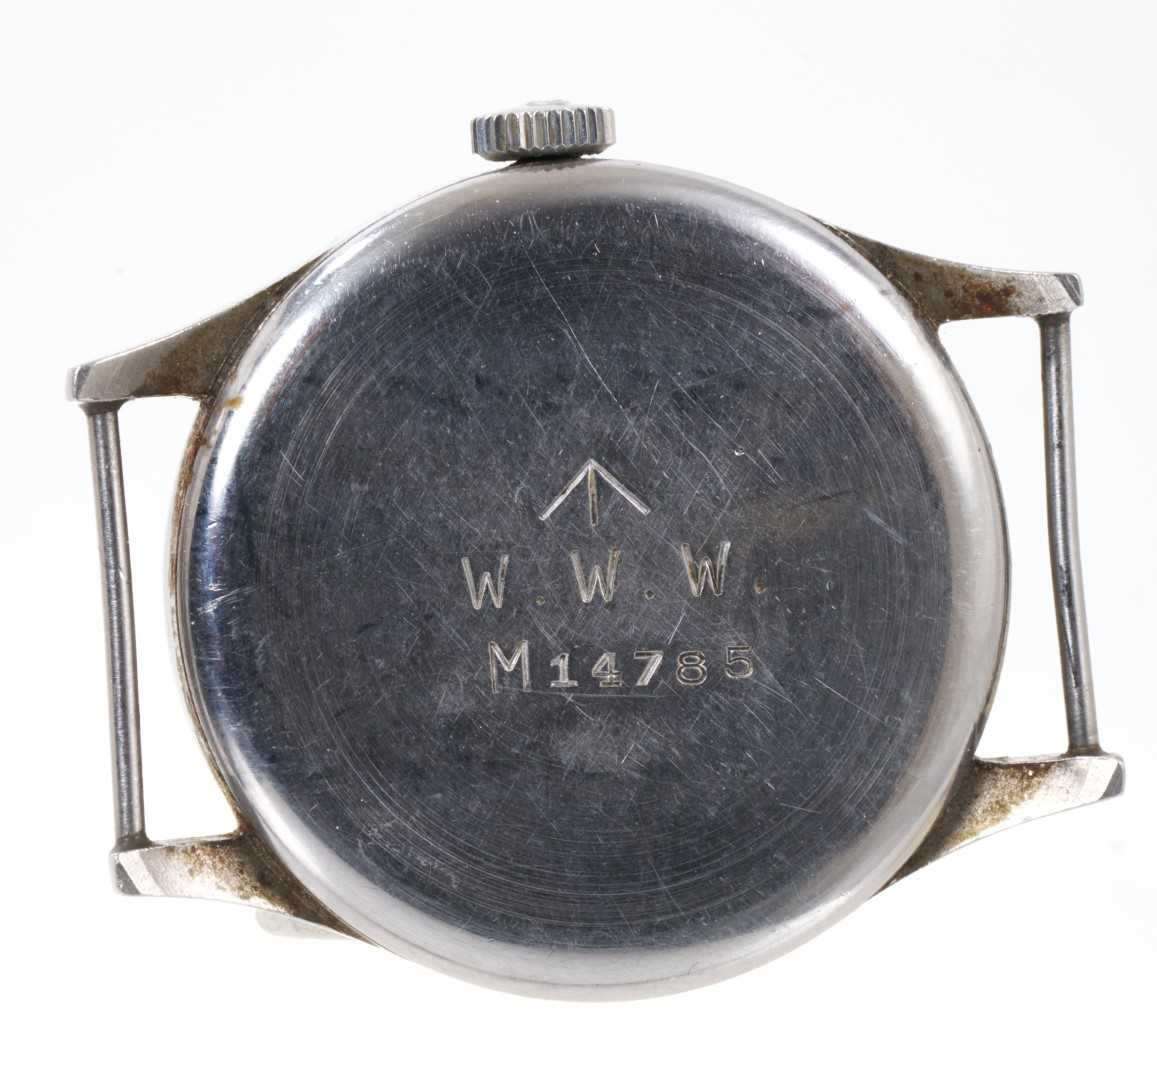 Second World War IWC military ‘Dirty Dozen’wristwatch - Image 2 of 5